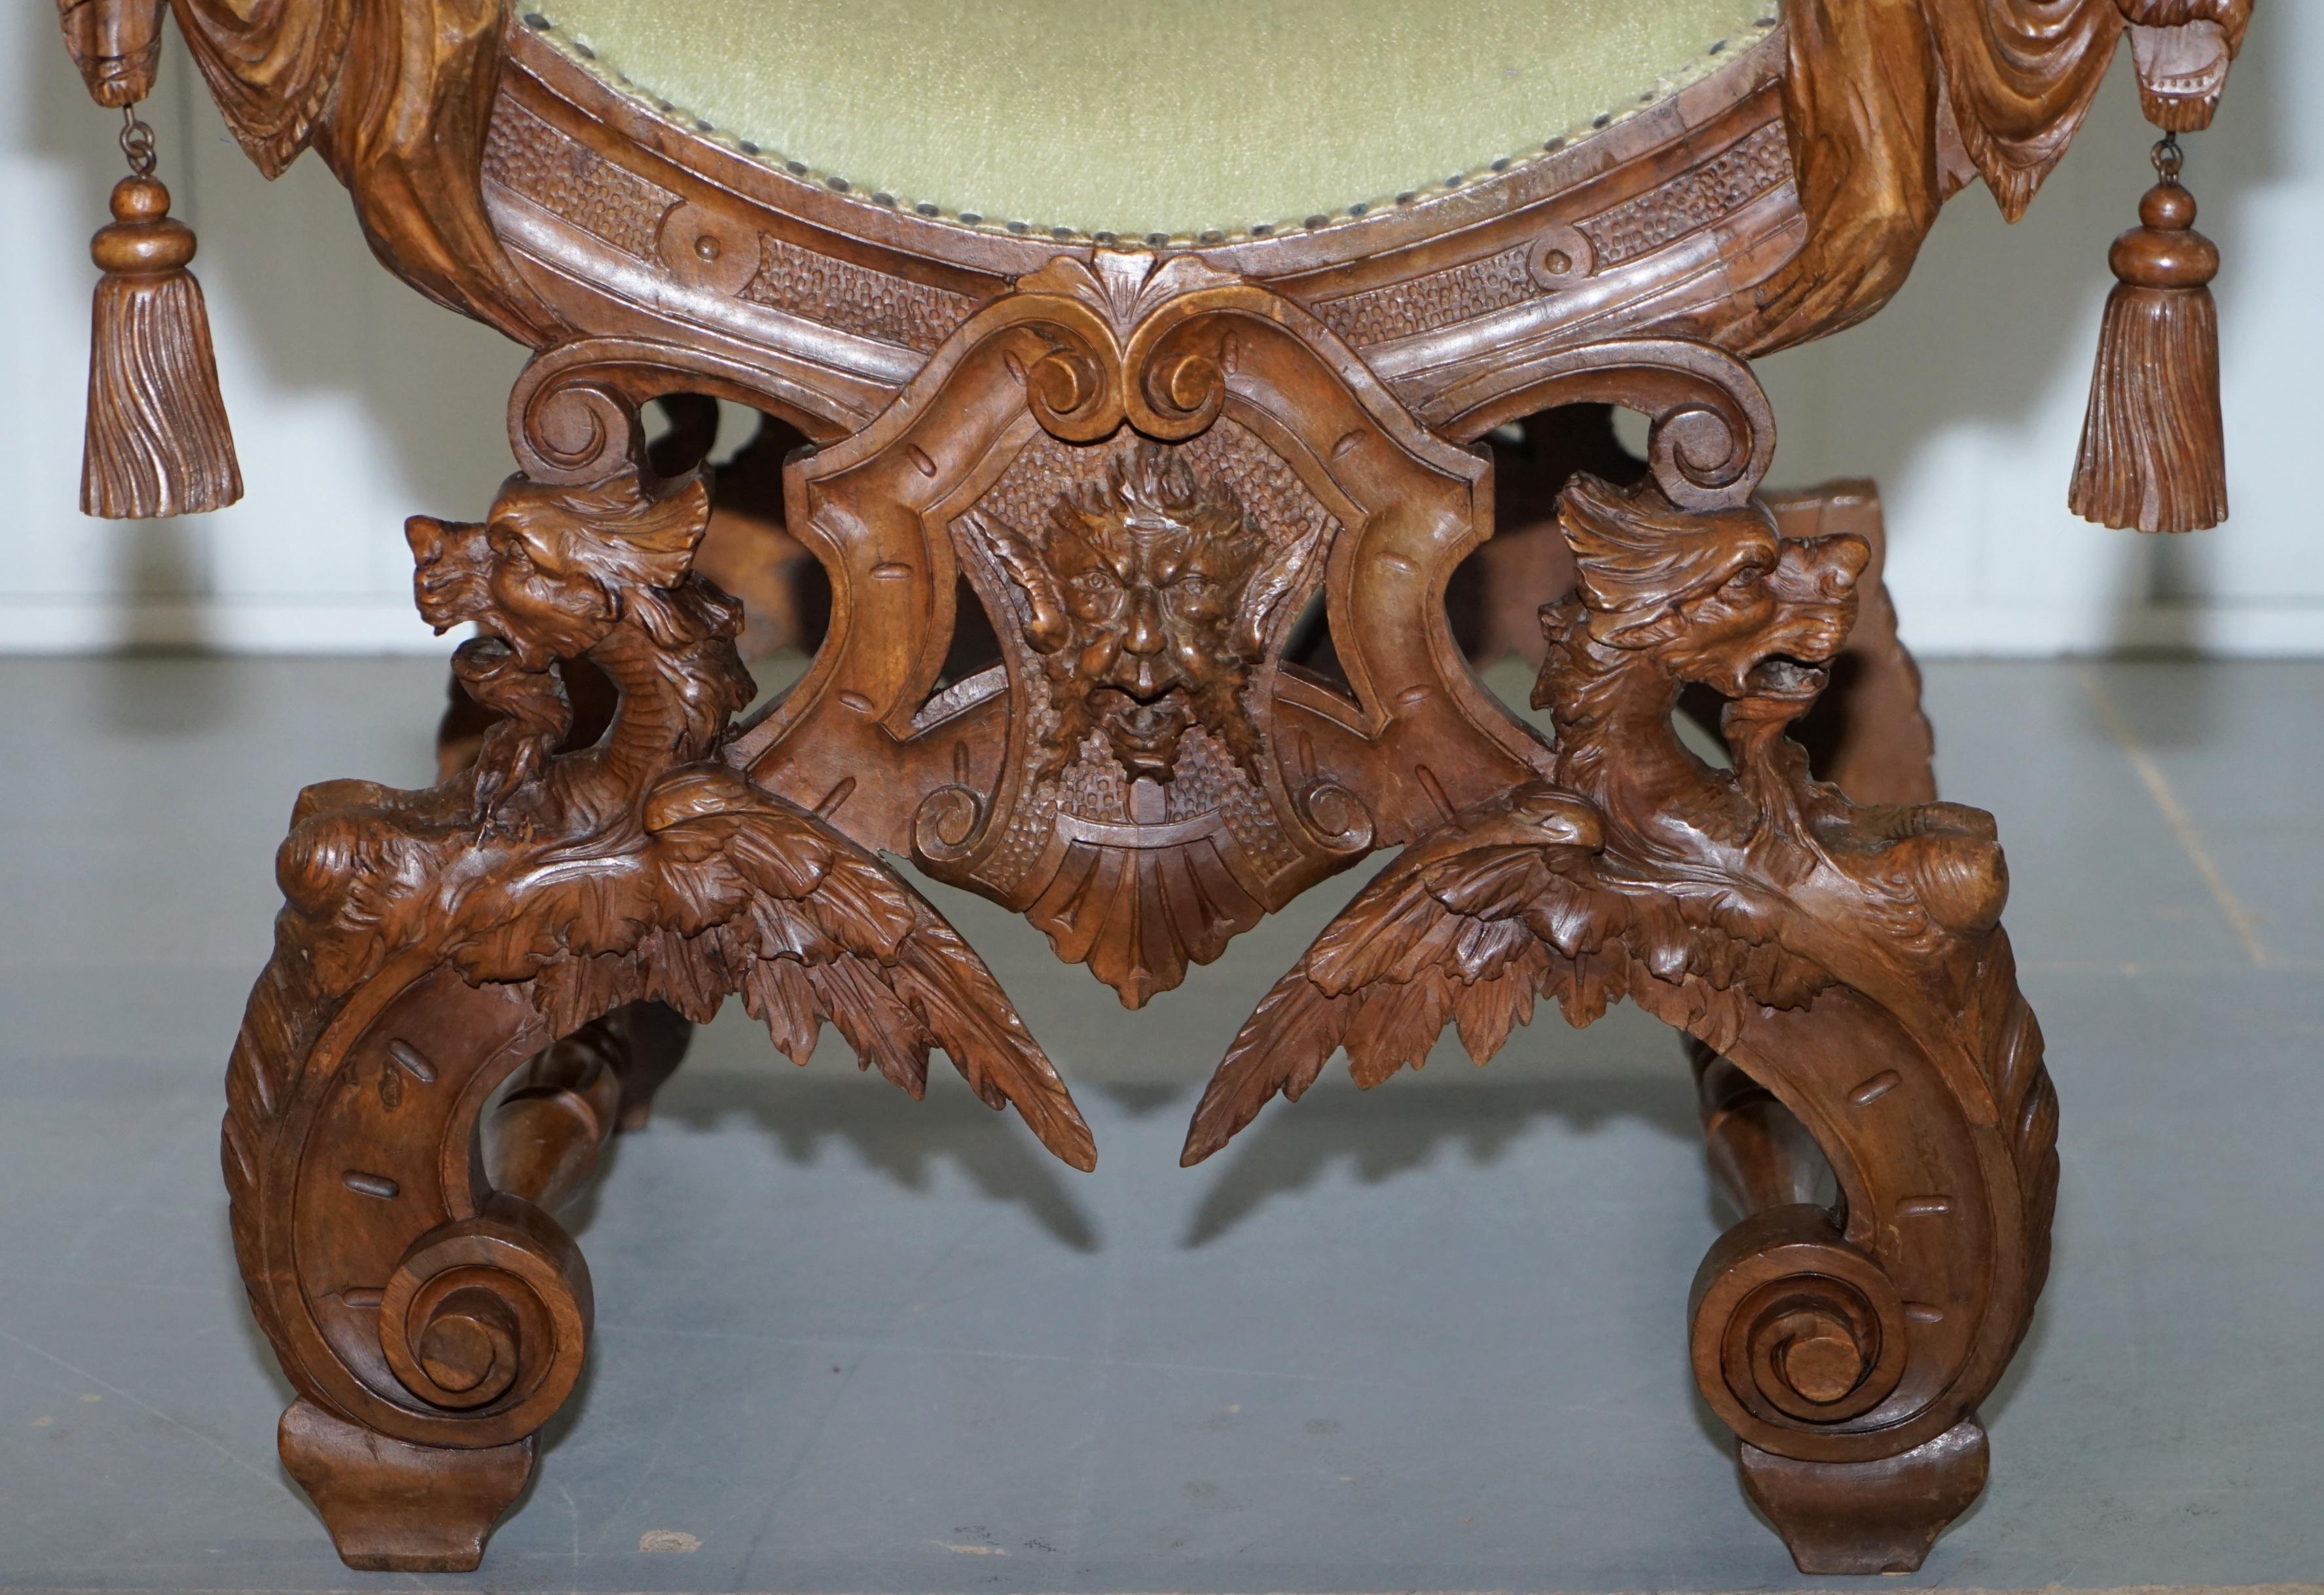 Rare Italian Renaissance Hand Carved Walnut Chair / Bench Seat Cherubs Dragons 1